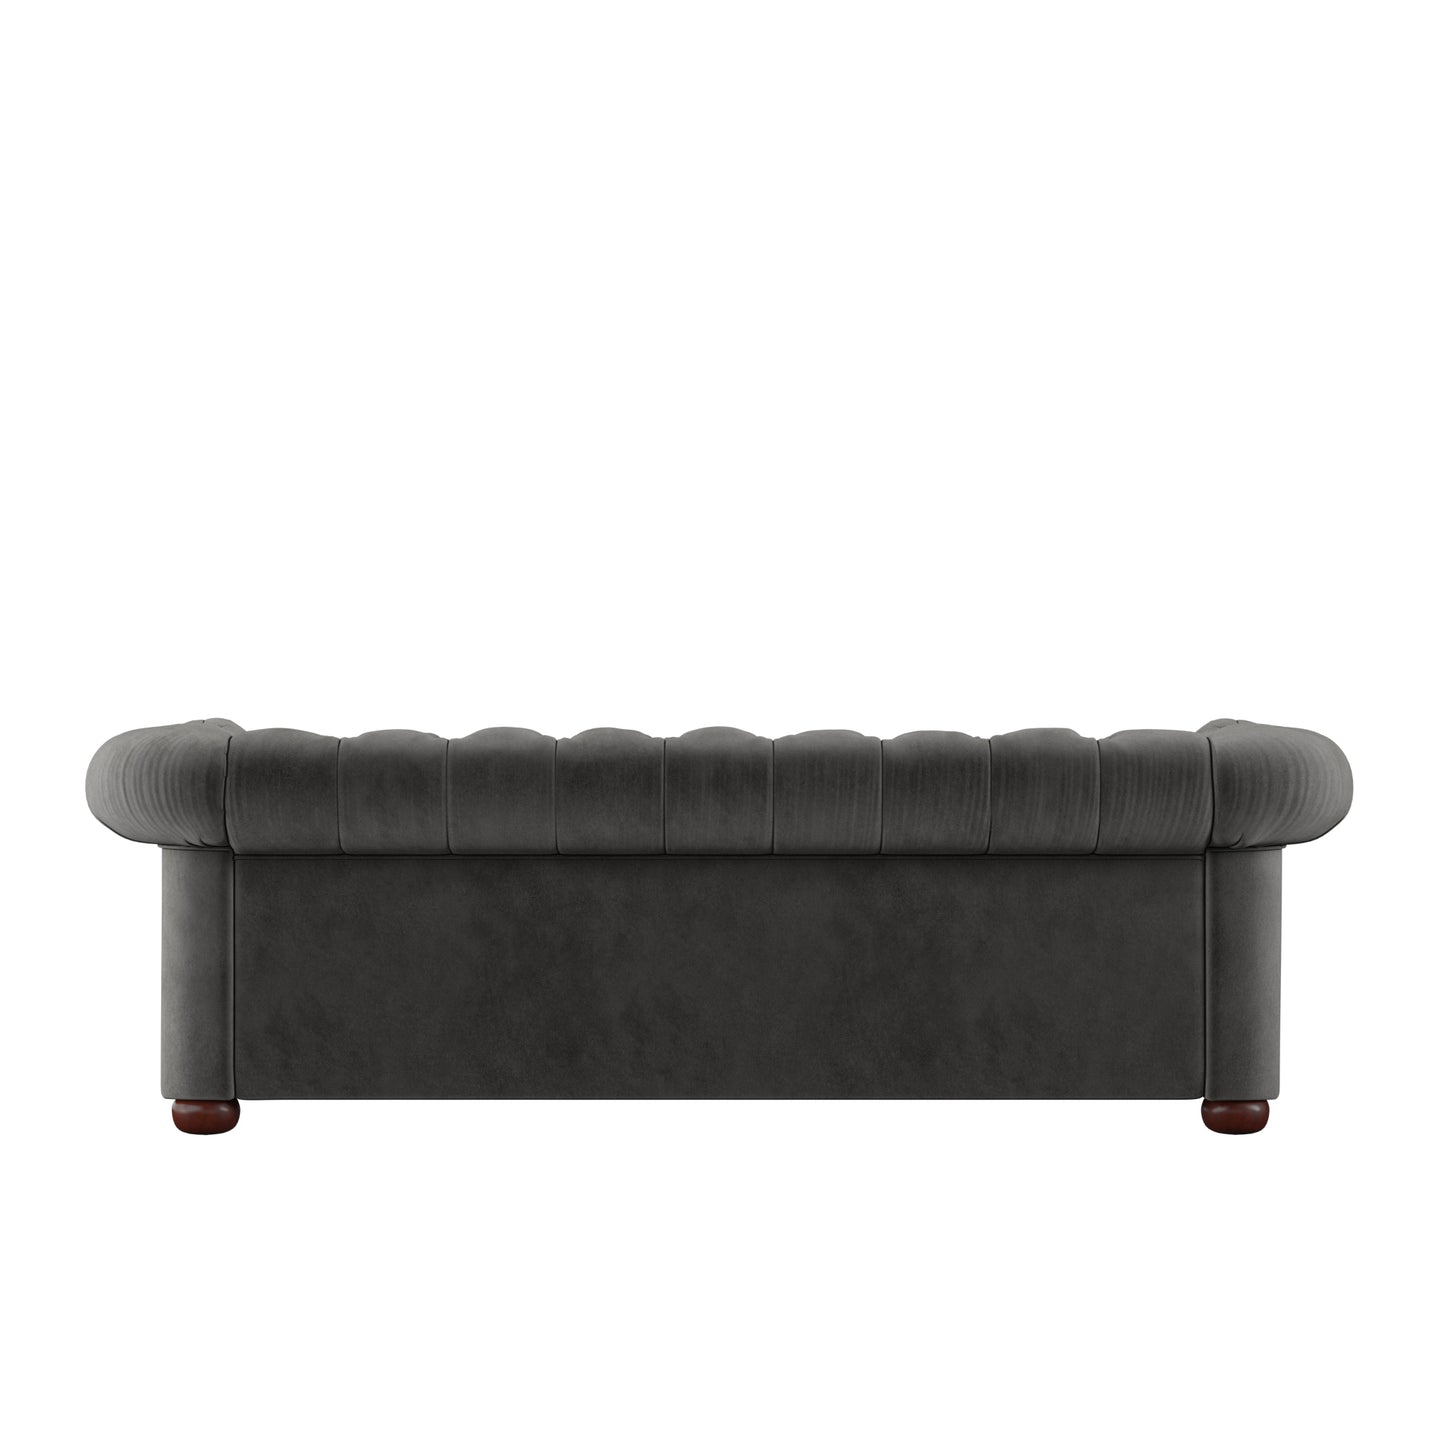 Tufted Scroll Arm Chesterfield Sofa - Dark Grey Velvet